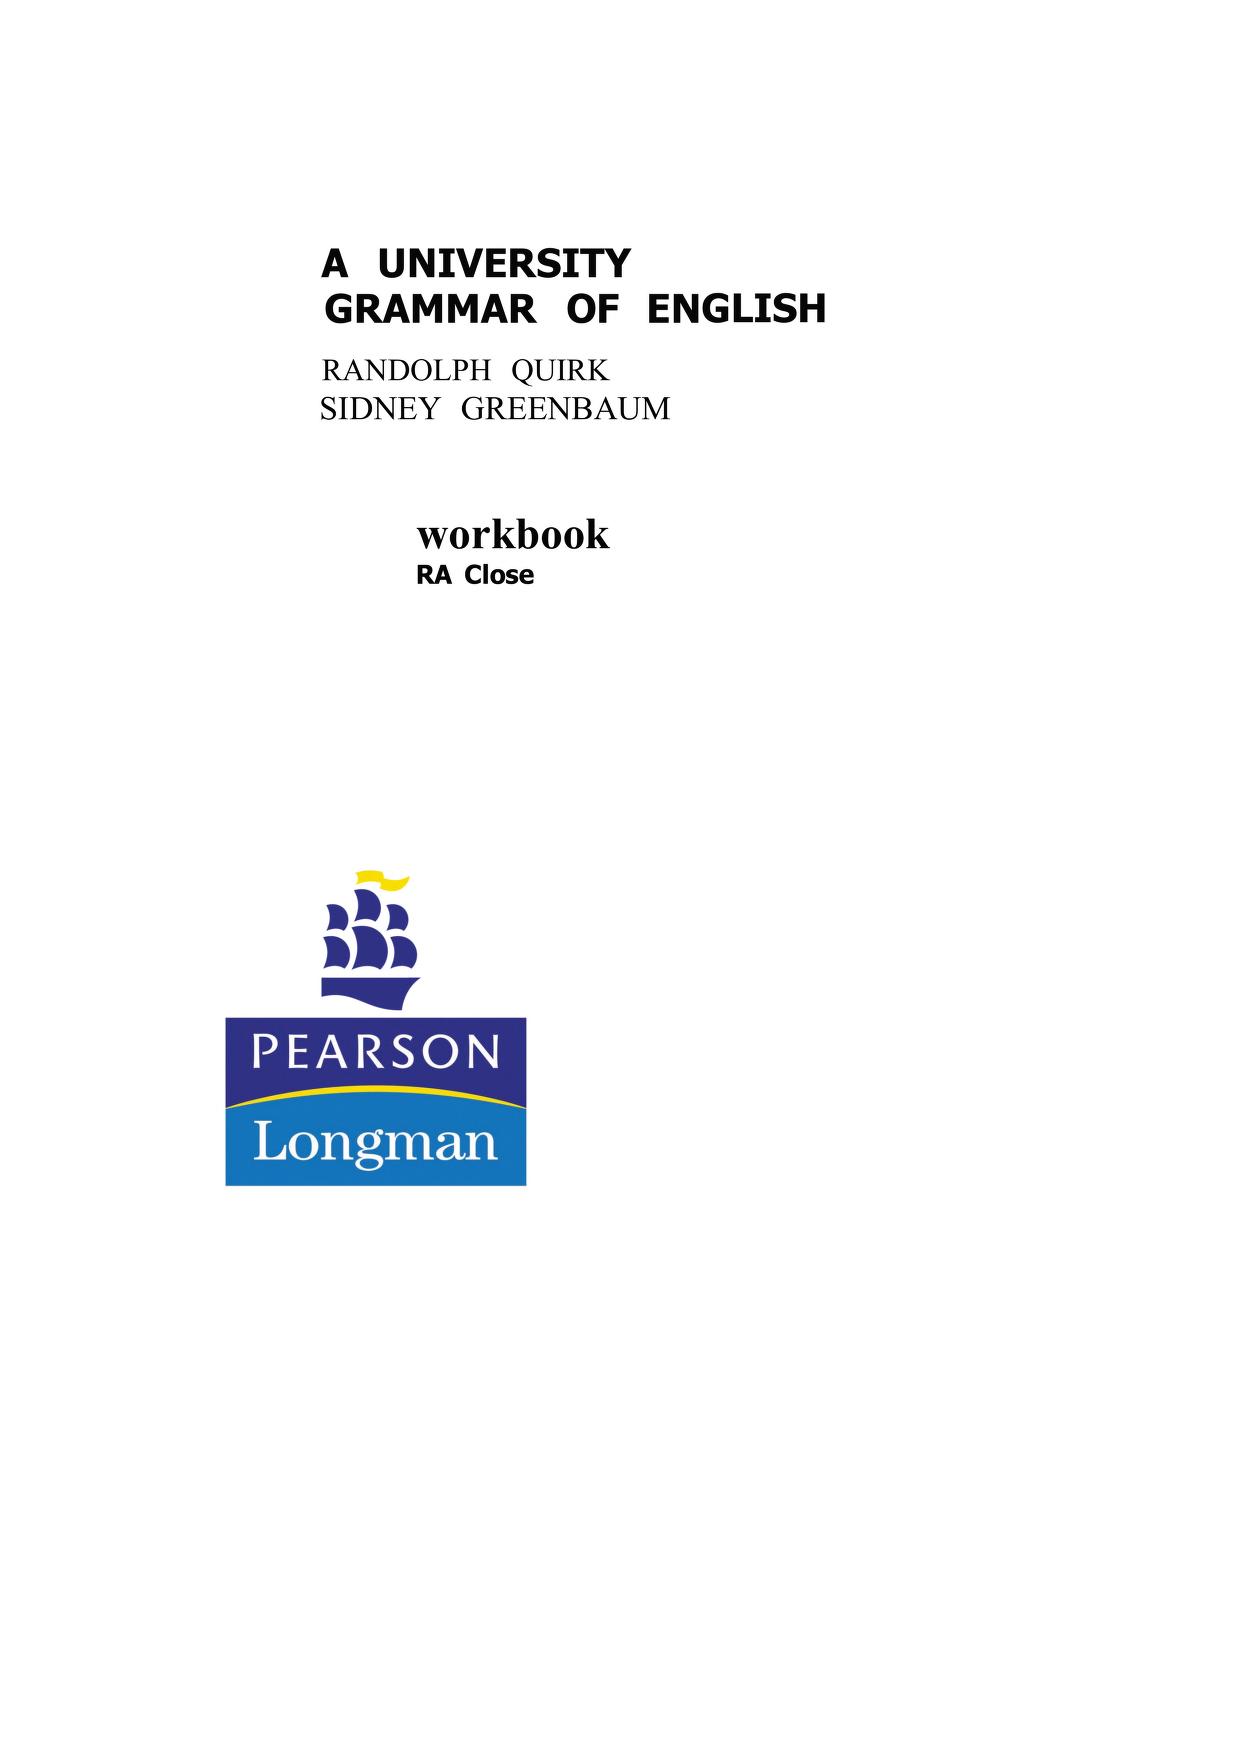 a university grammar of english workbook pdf free download